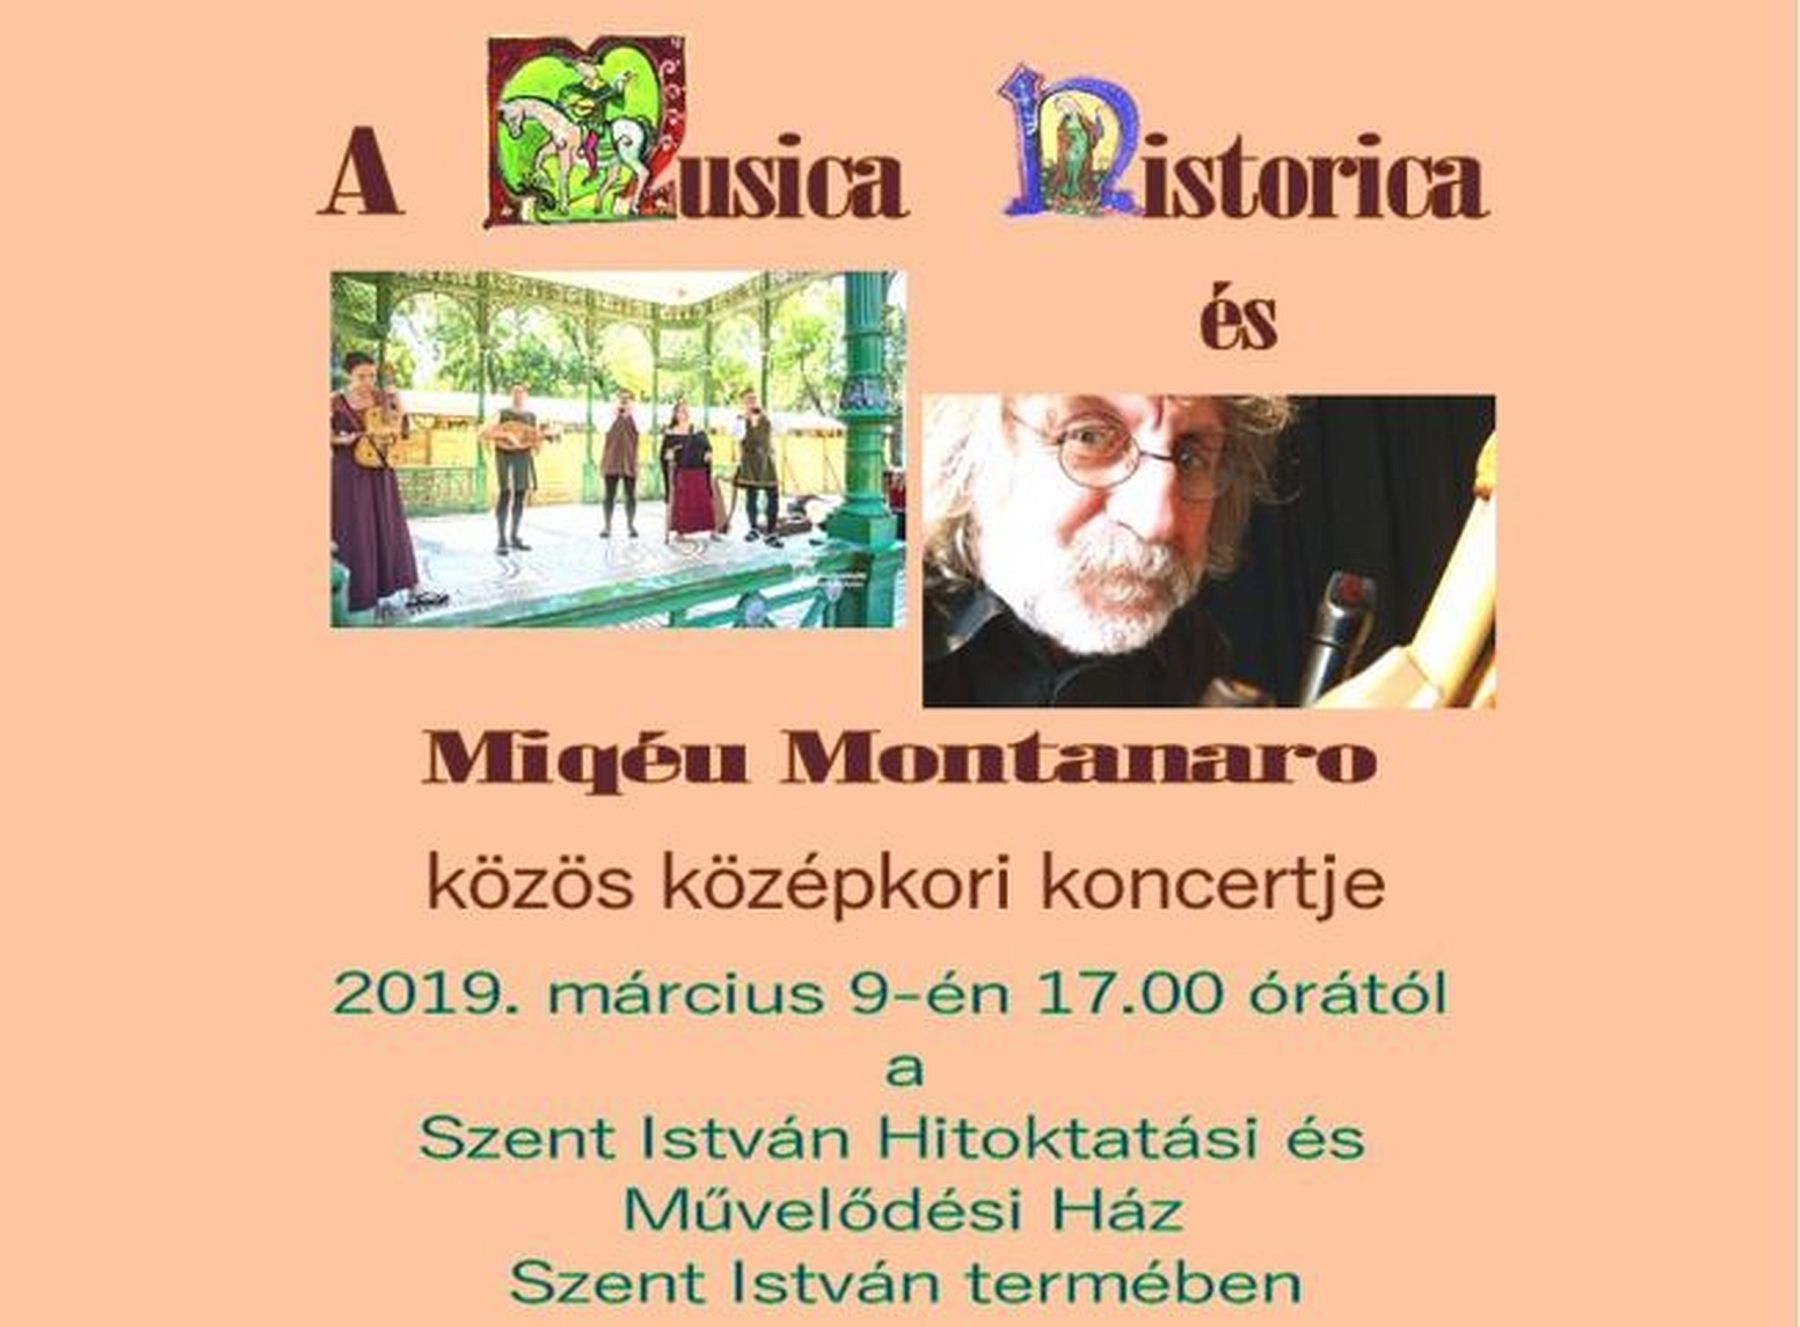 A Musica Historica és Miqéu Montanaro közös középkori koncertje